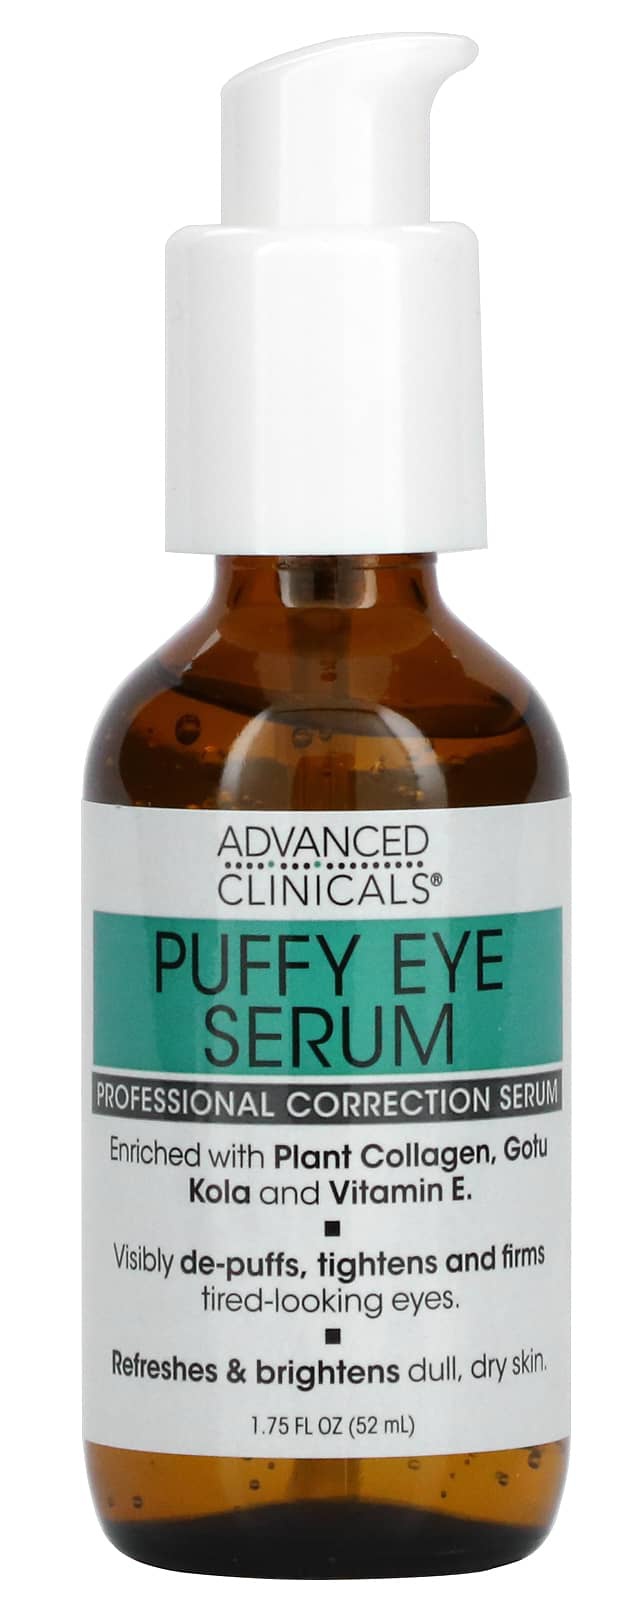 Advanced Clinicals Puffy Eye Serum, Professional Correction Serum